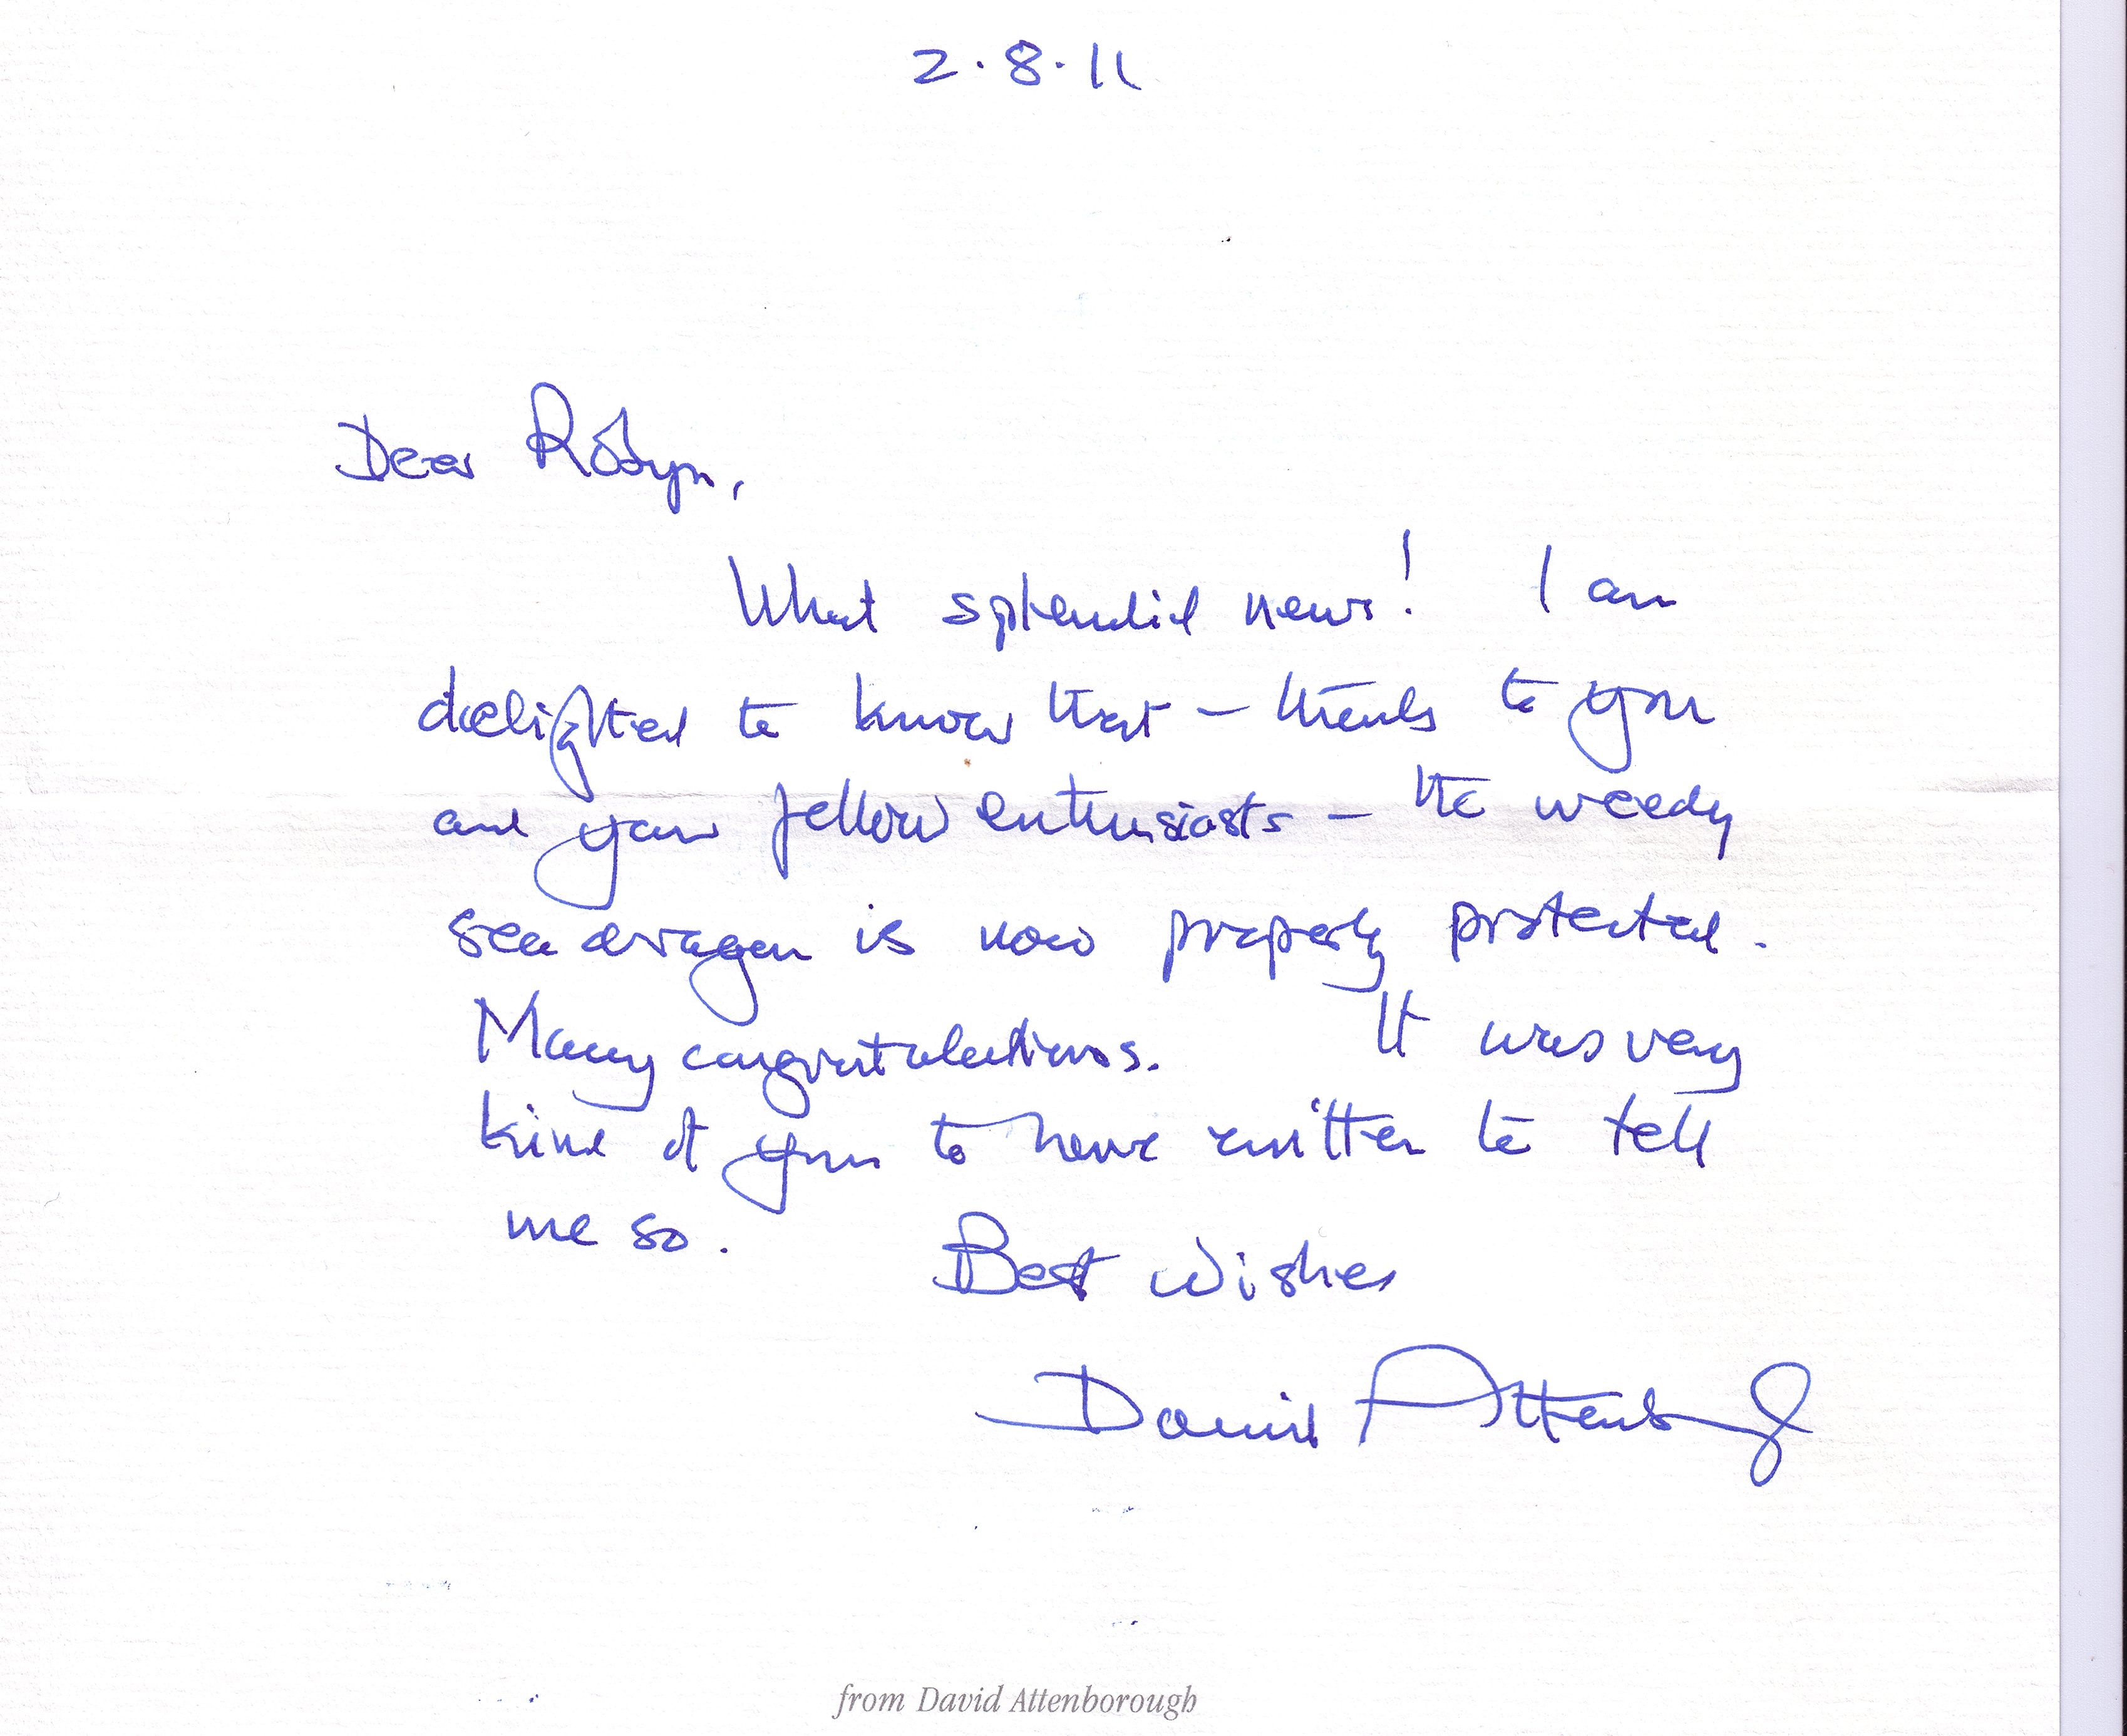 Congratulation letter from David Attenborough